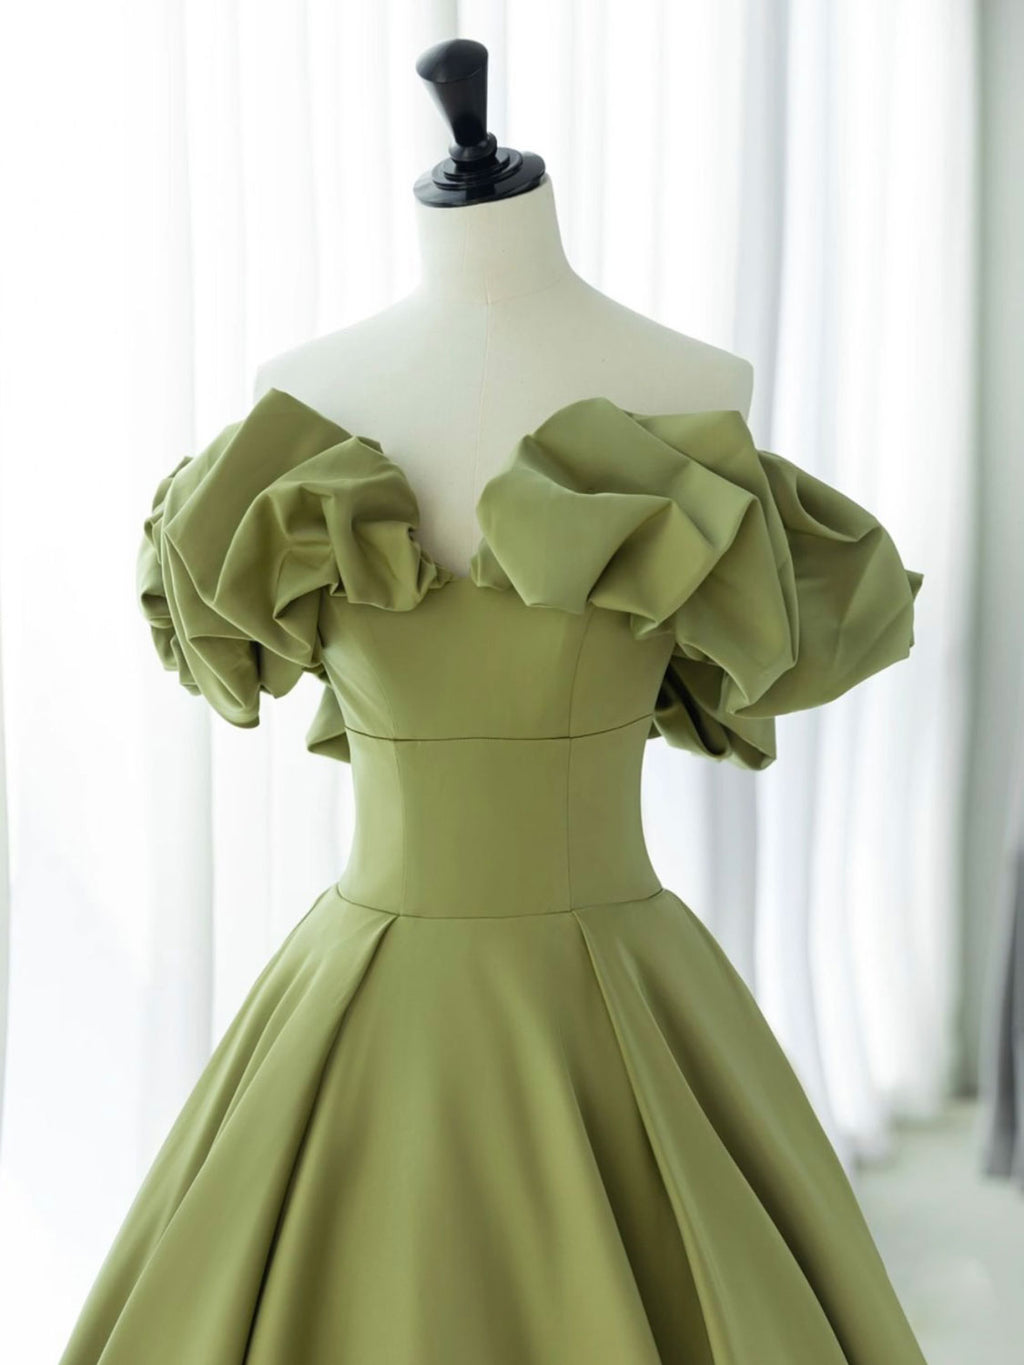 Green A-Line Satin Long Prom Dresses, Green Formal Evening Dress